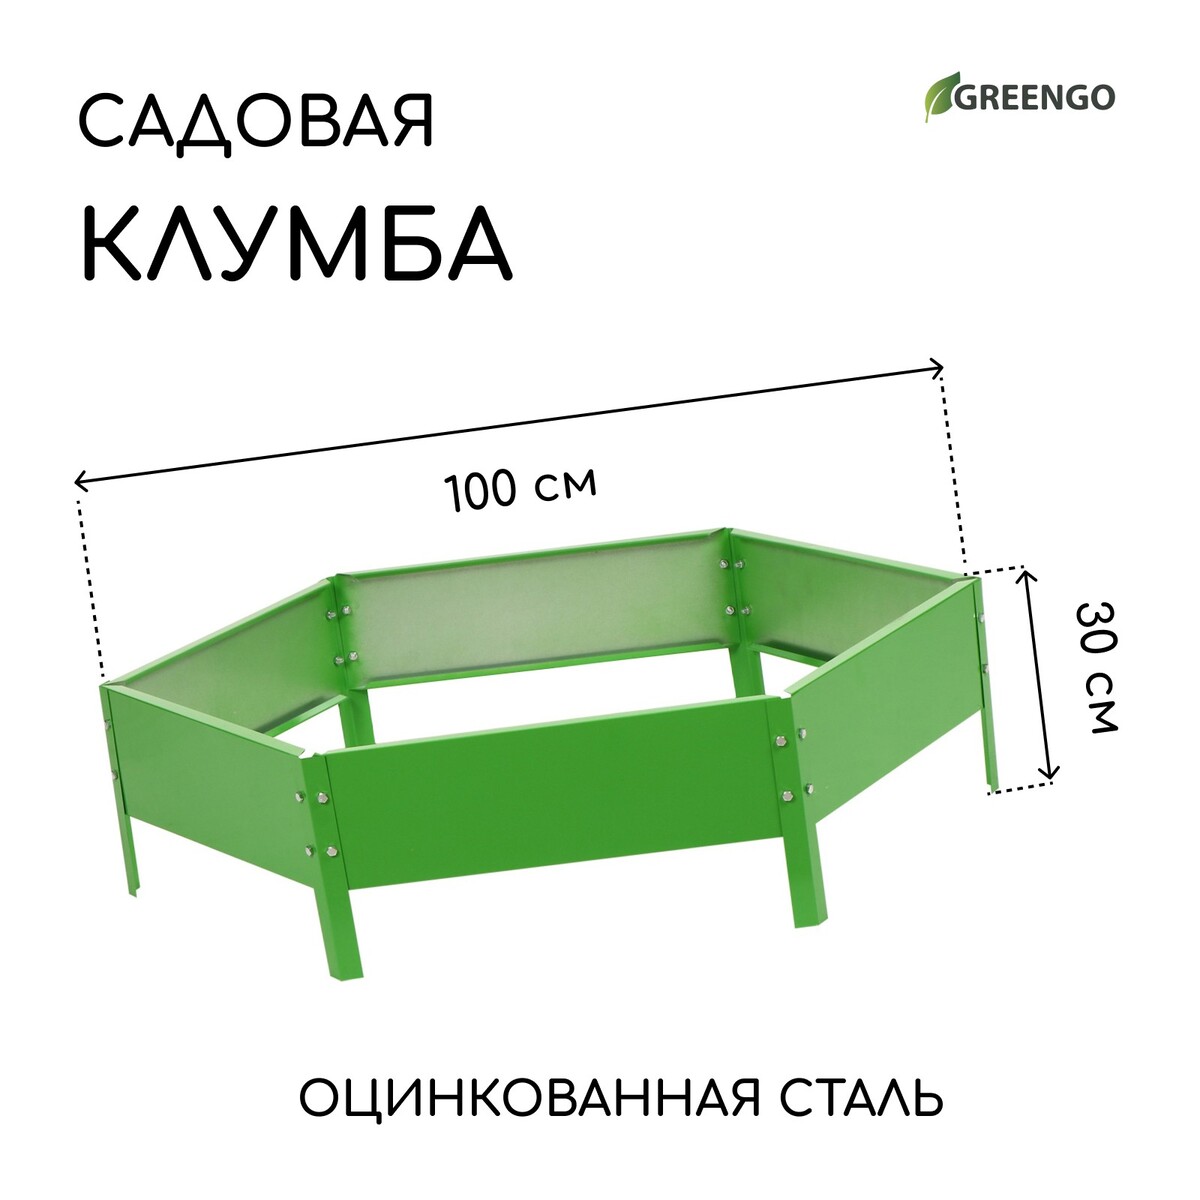 Клумба оцинкованная, d = 100 см, h = 15 см, ярко-зеленая, greengo клумба оцинкованная 50 × 15 см ярко зеленая